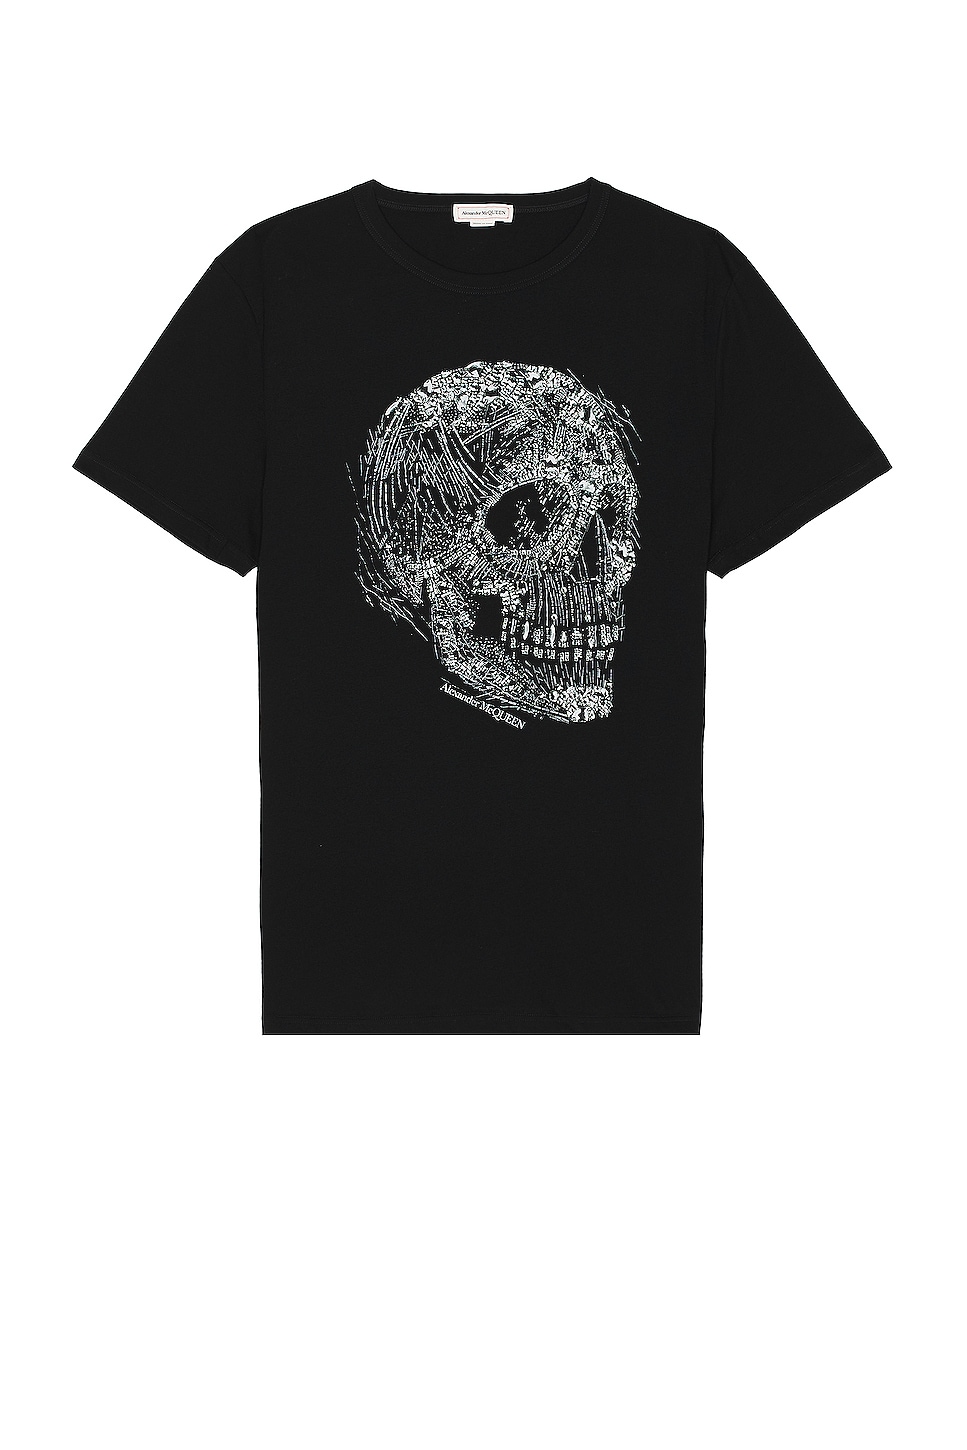 Image 1 of Alexander McQueen Crystal Skull Print T-shirt in Black & White